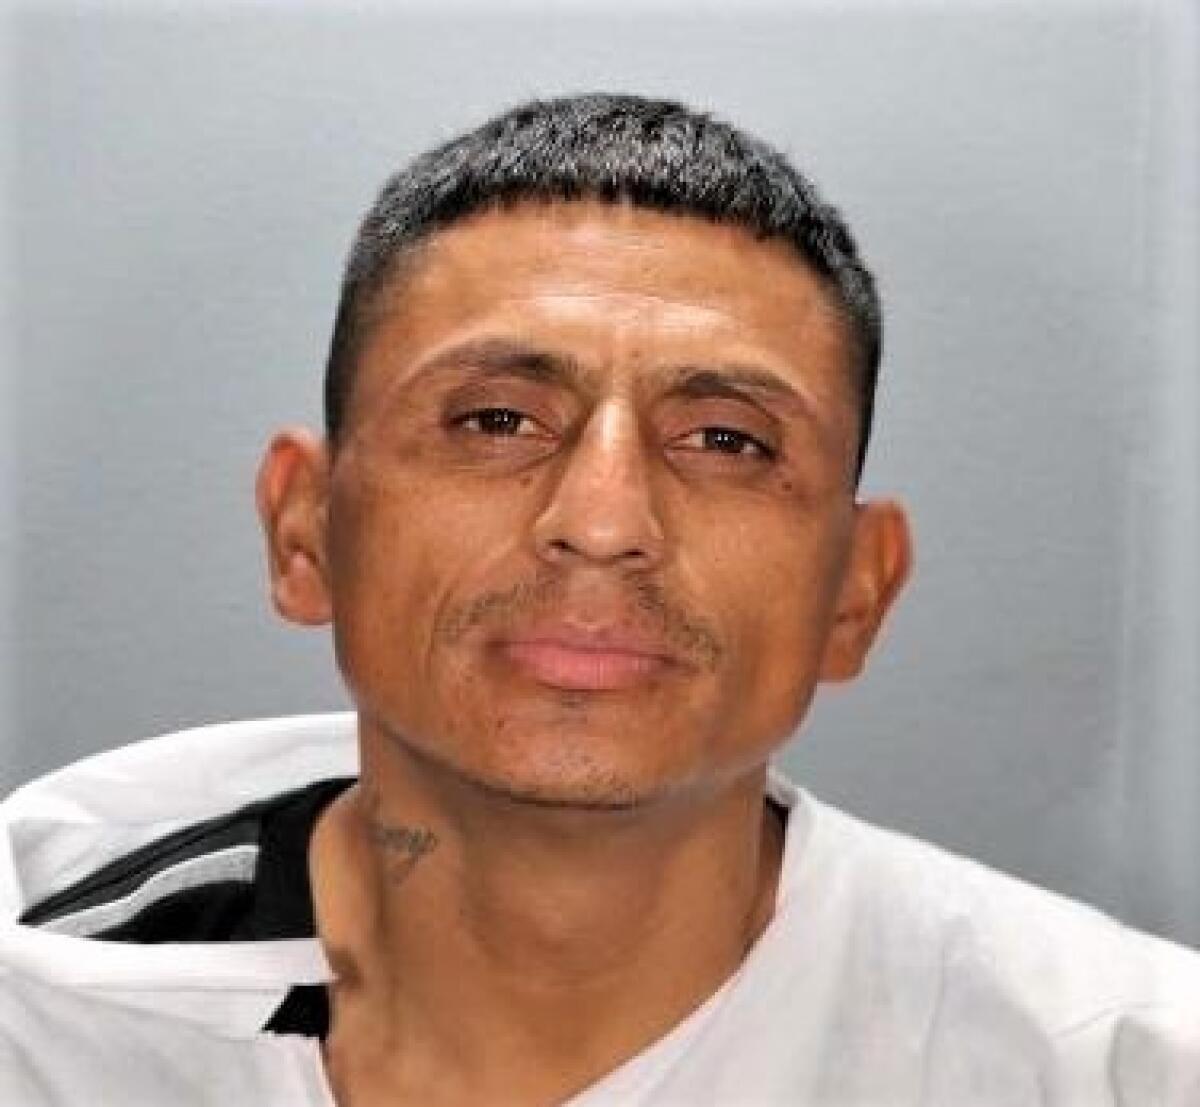 Hector Alfonso Perezrodriguez, 33, was arrested May 13 by Costa Mesa police on suspicion of animal cruelty.